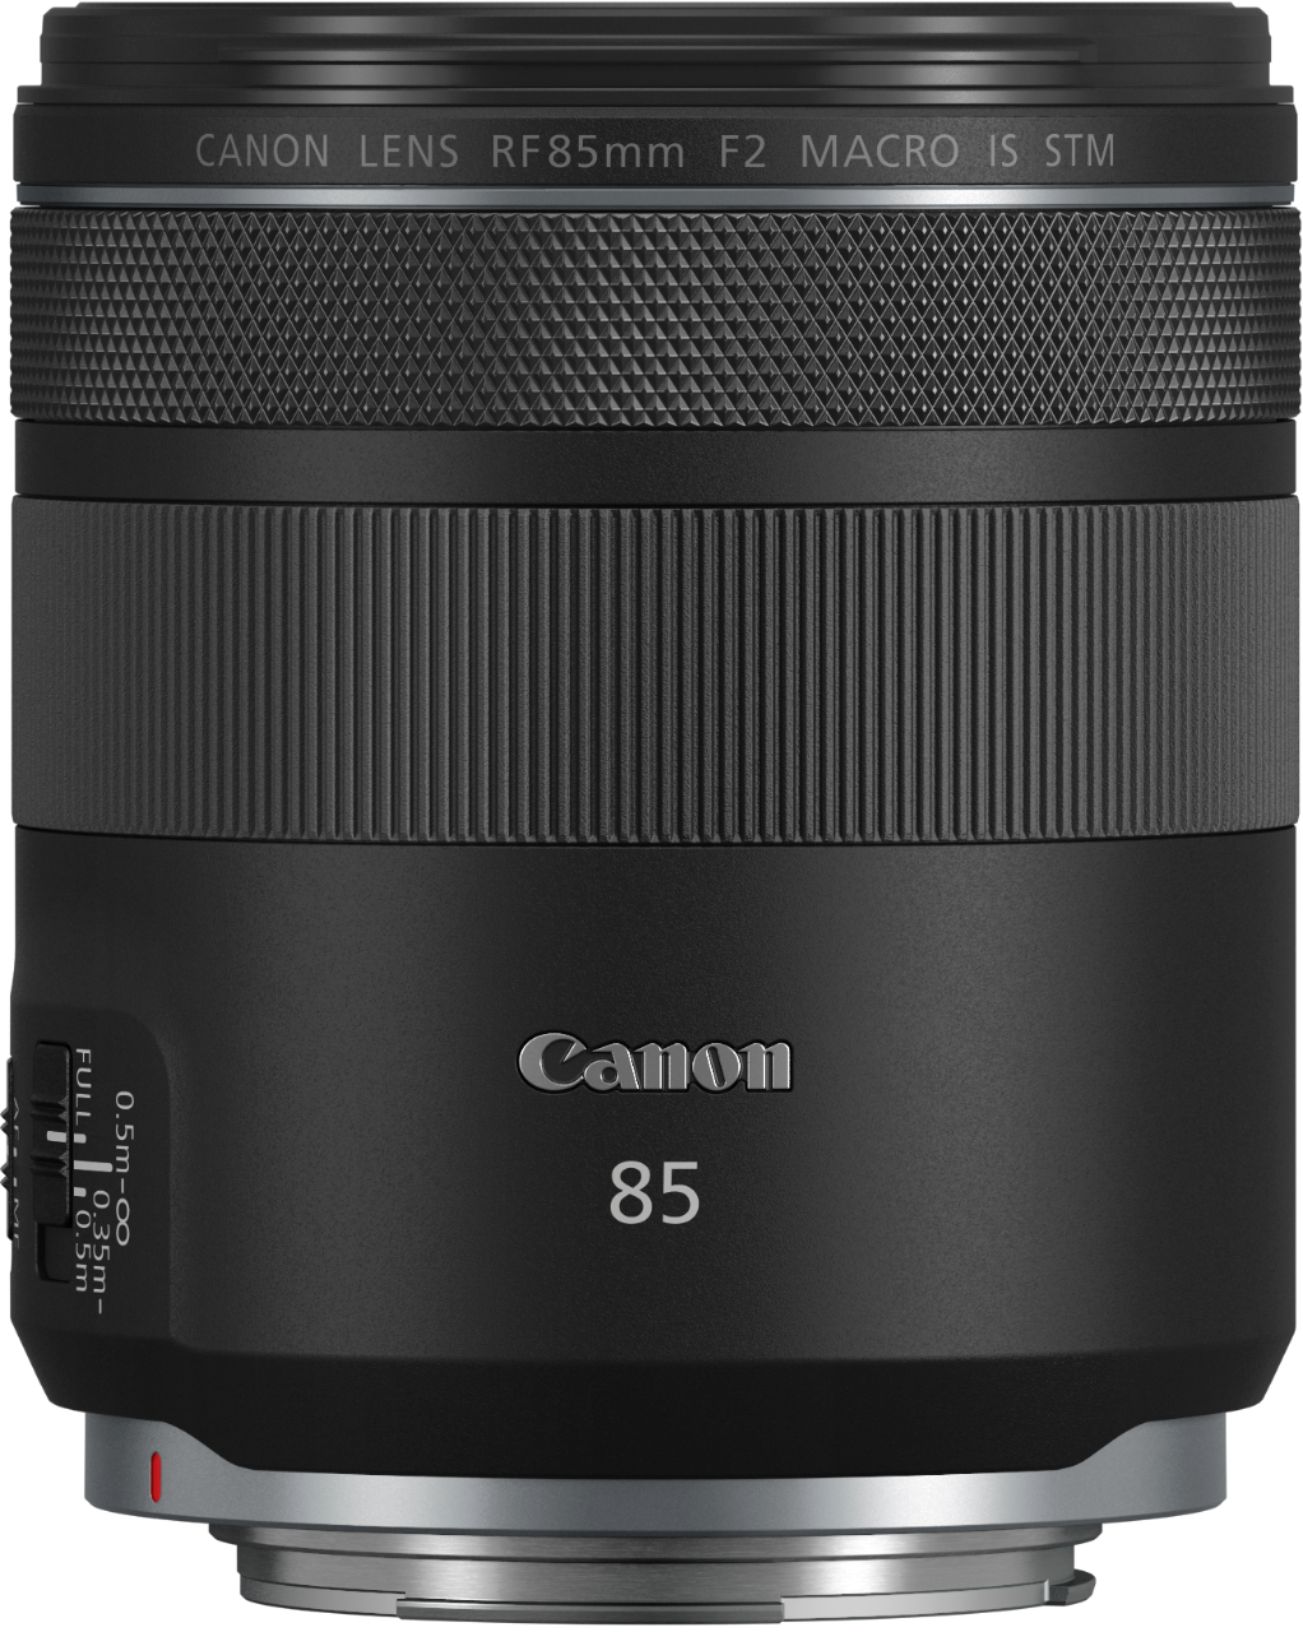 Back View: Canon - ET-73C Lens Hood for RF 100mm f/2.8 L MACRO IS USM Lens - Black